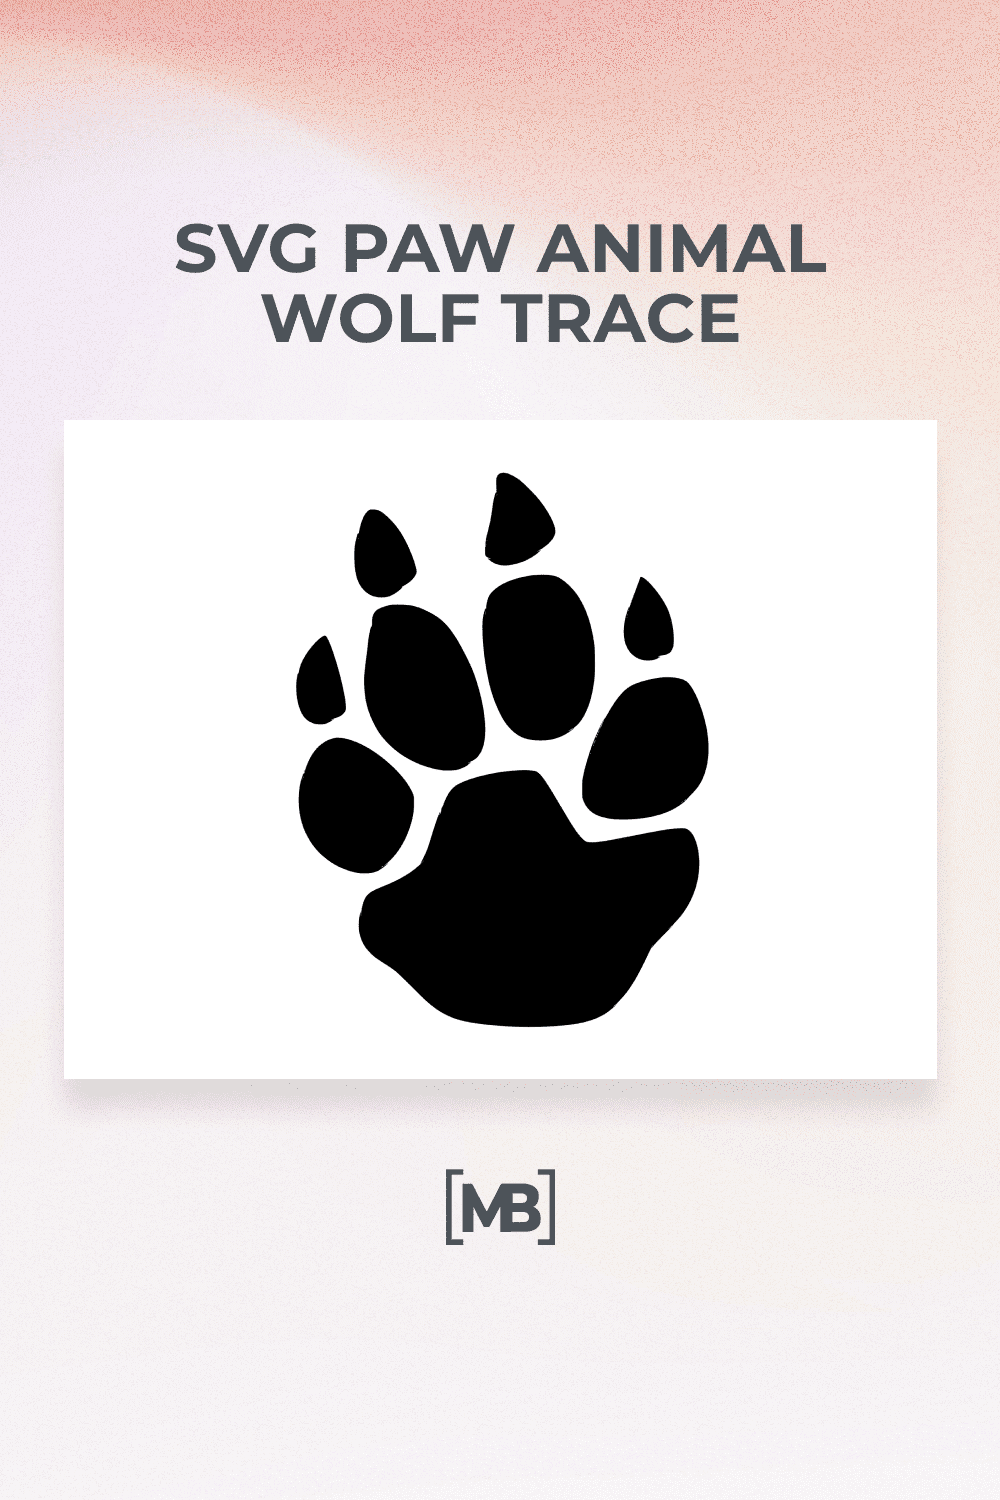 SVG paw animal wolf trace.